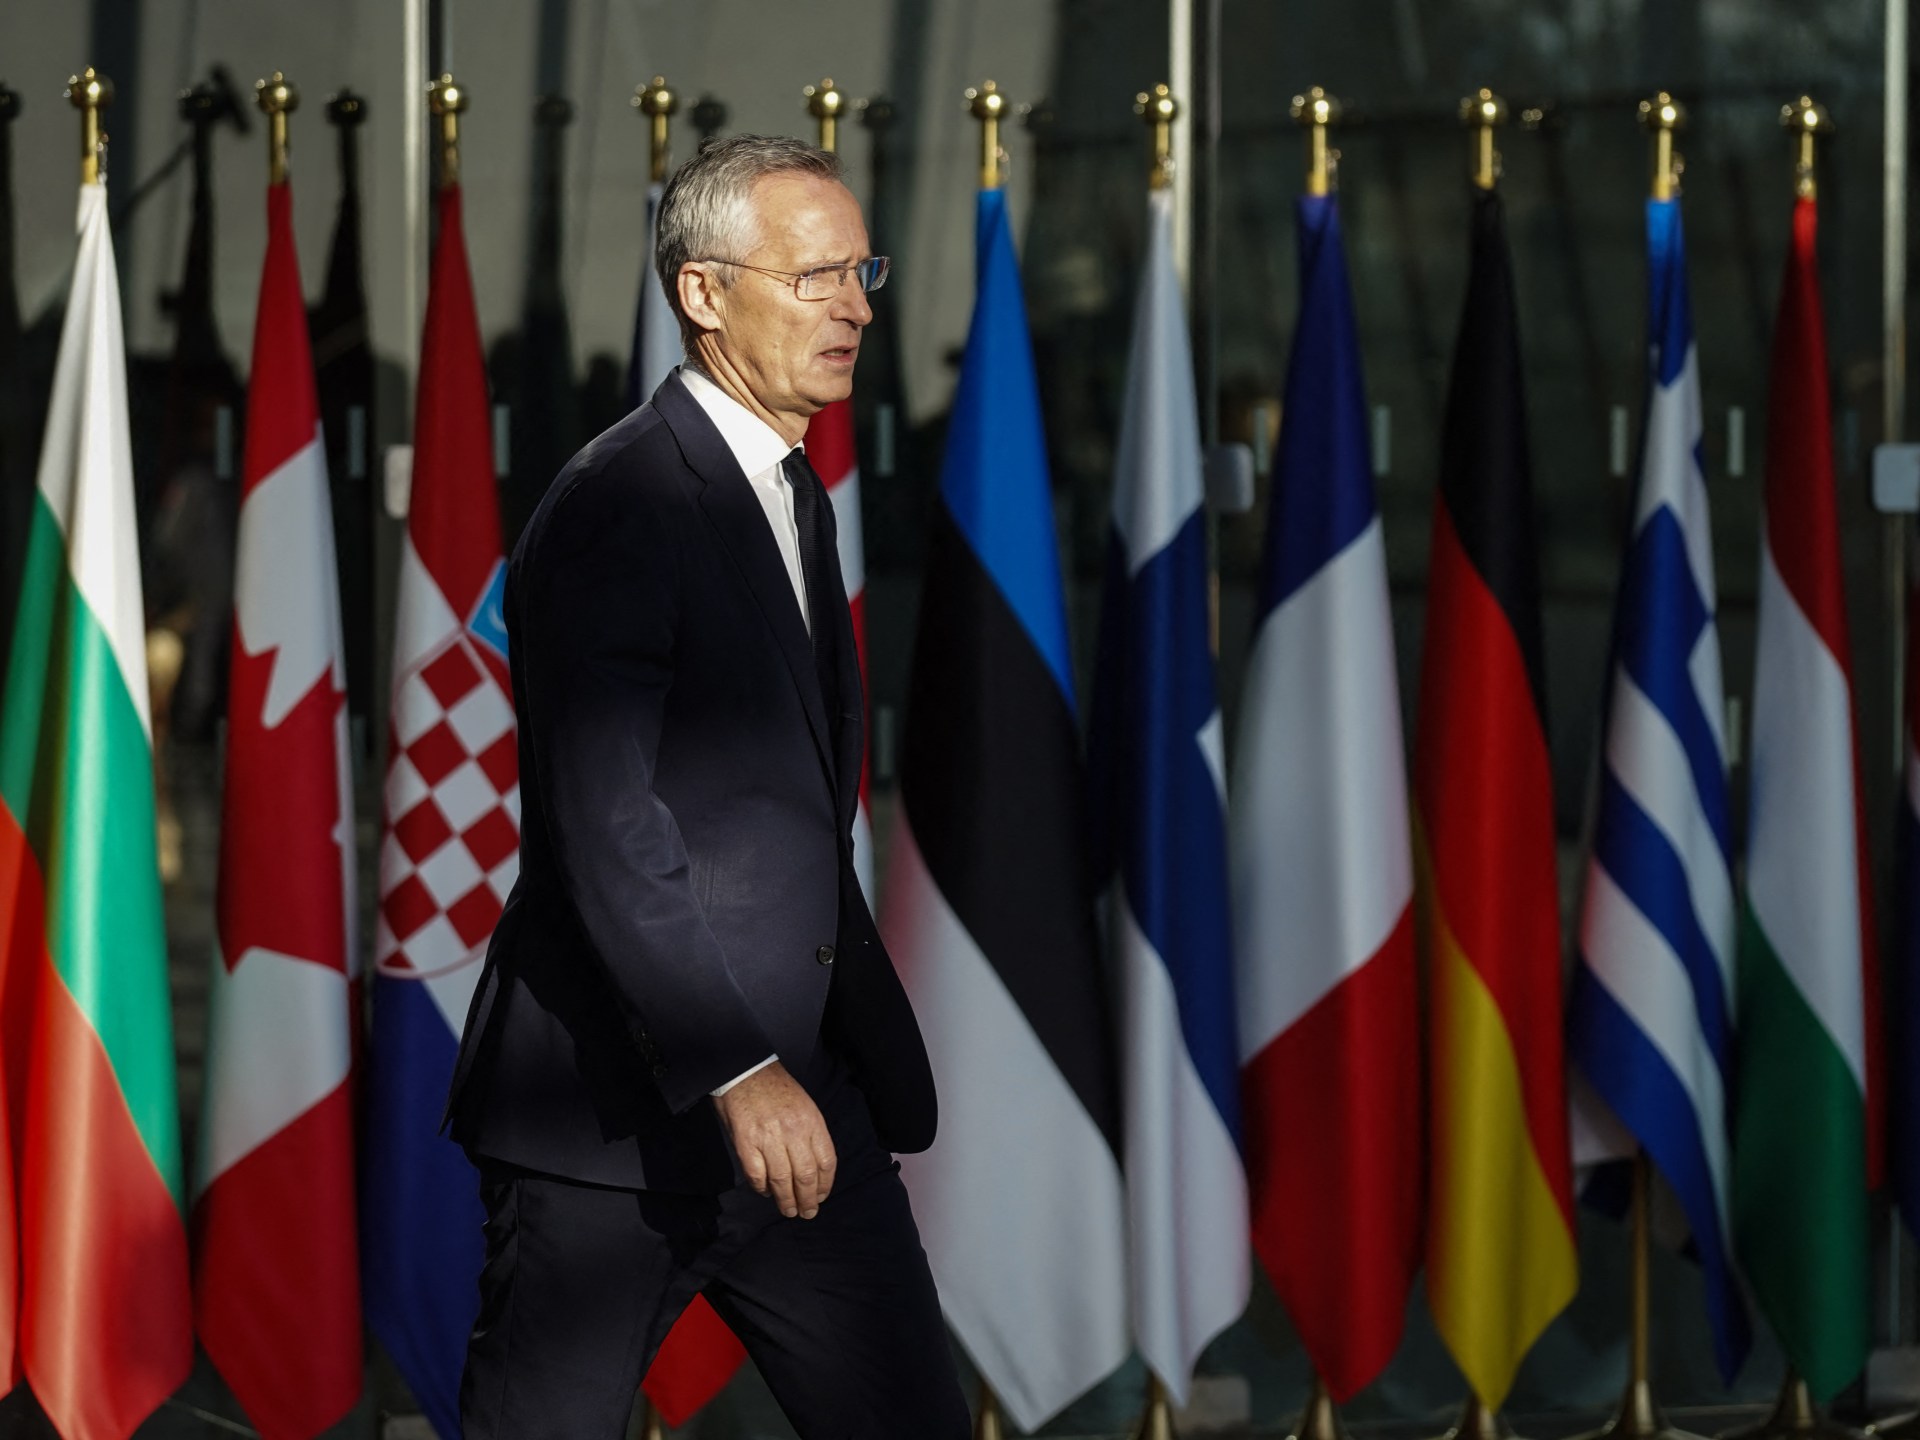 NATO ministers talk Russia-Ukraine war, Kosovo unrest at Brussels summit | NATO News #NATO #ministers #talk #RussiaUkraine #war #Kosovo #unrest #Brussels #summit #NATO #News